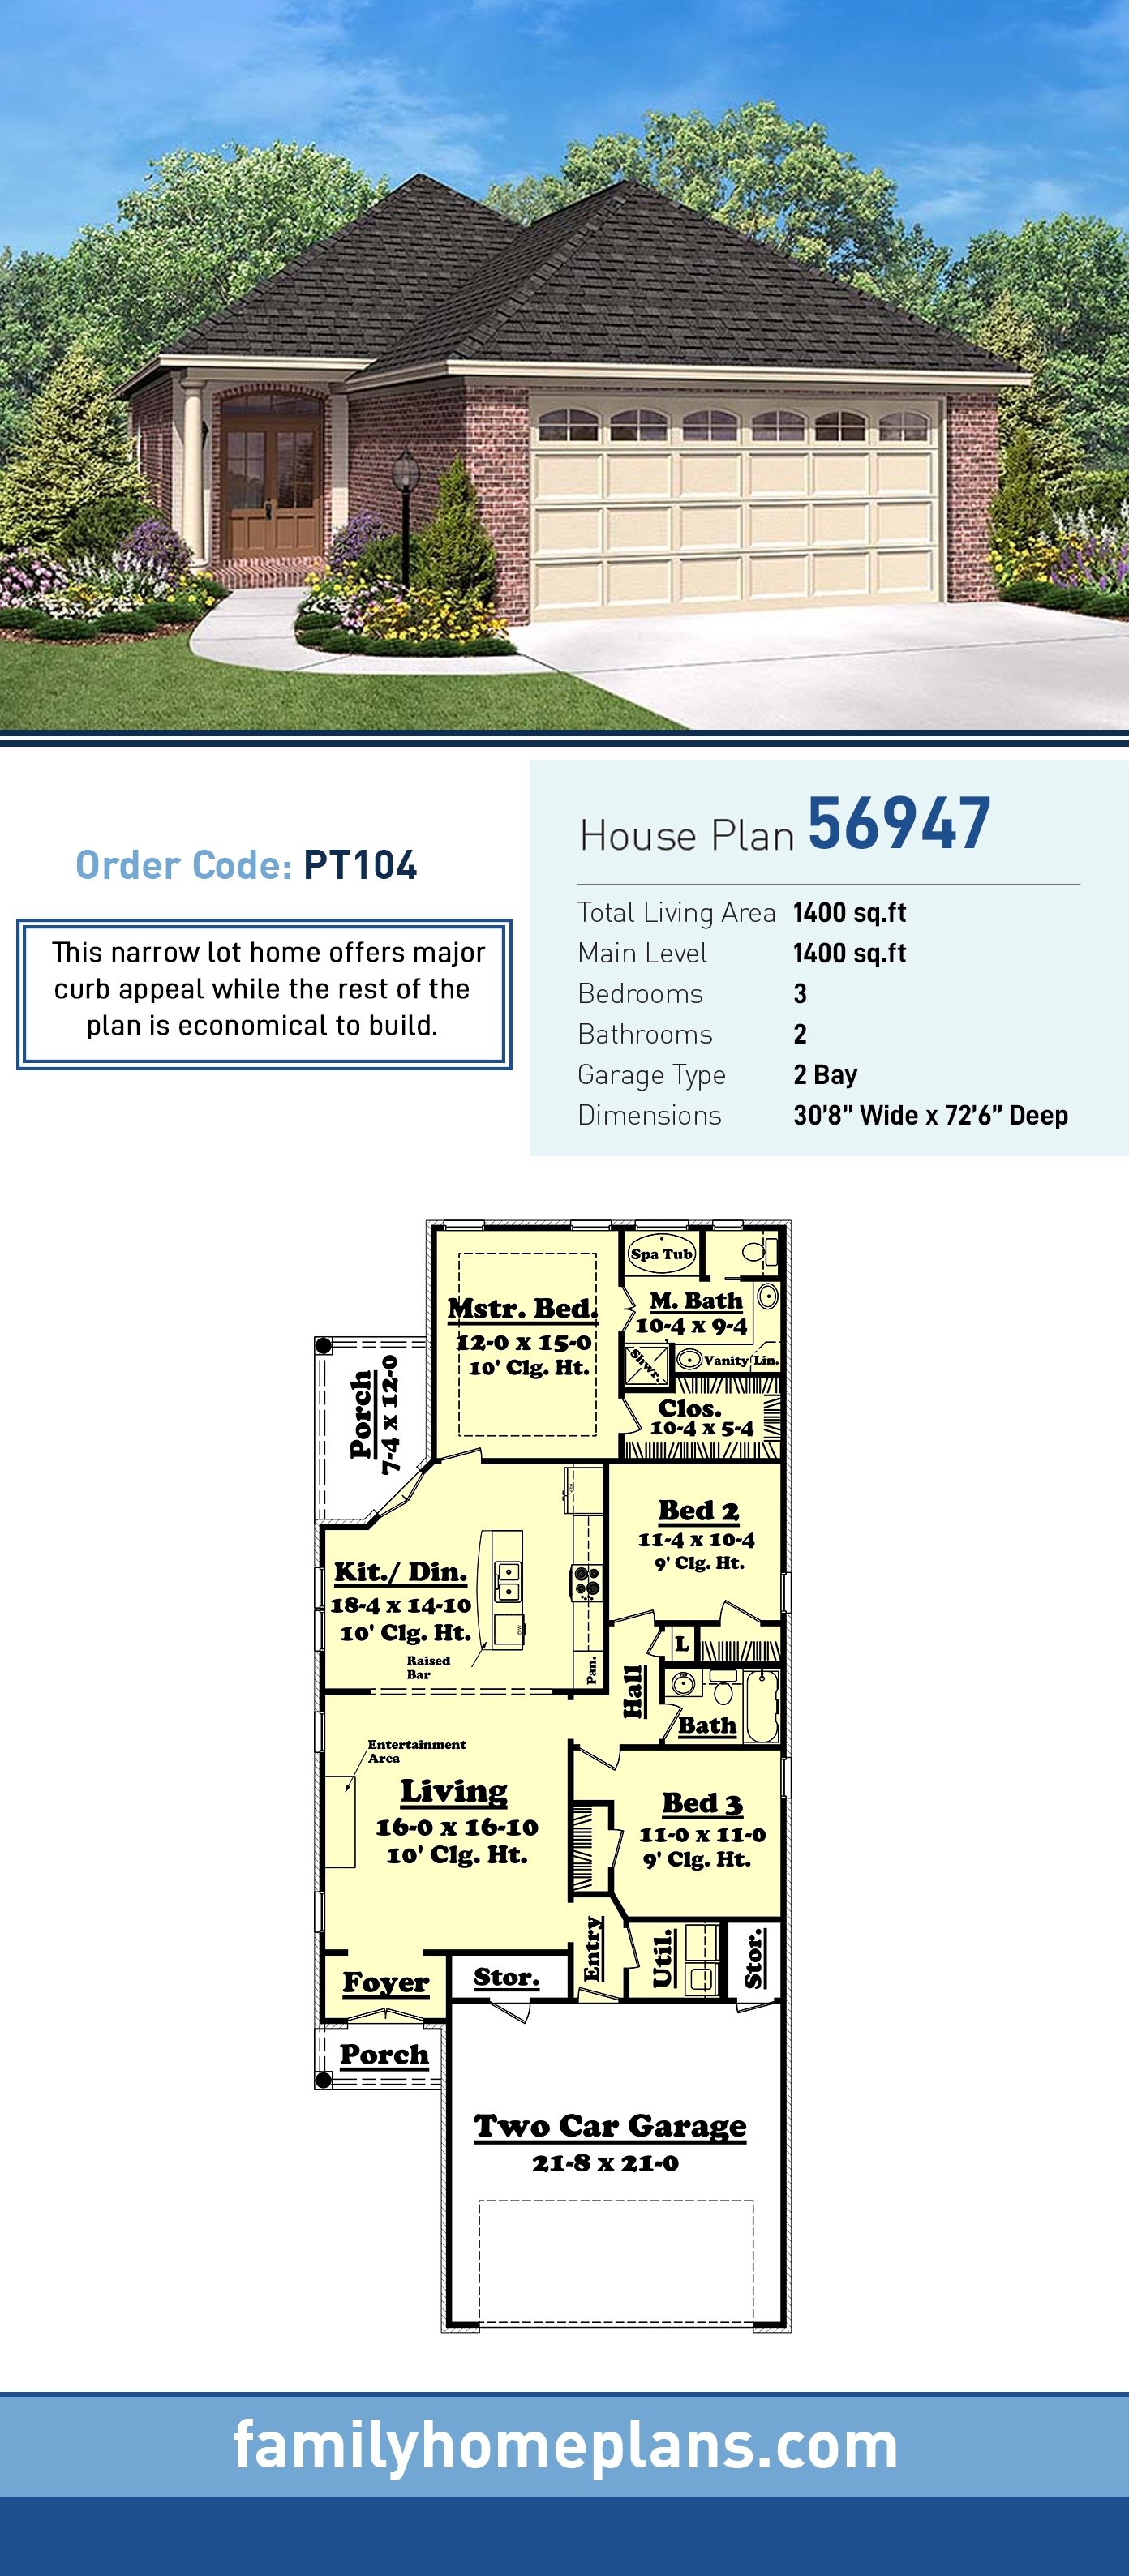 House Plan 56947